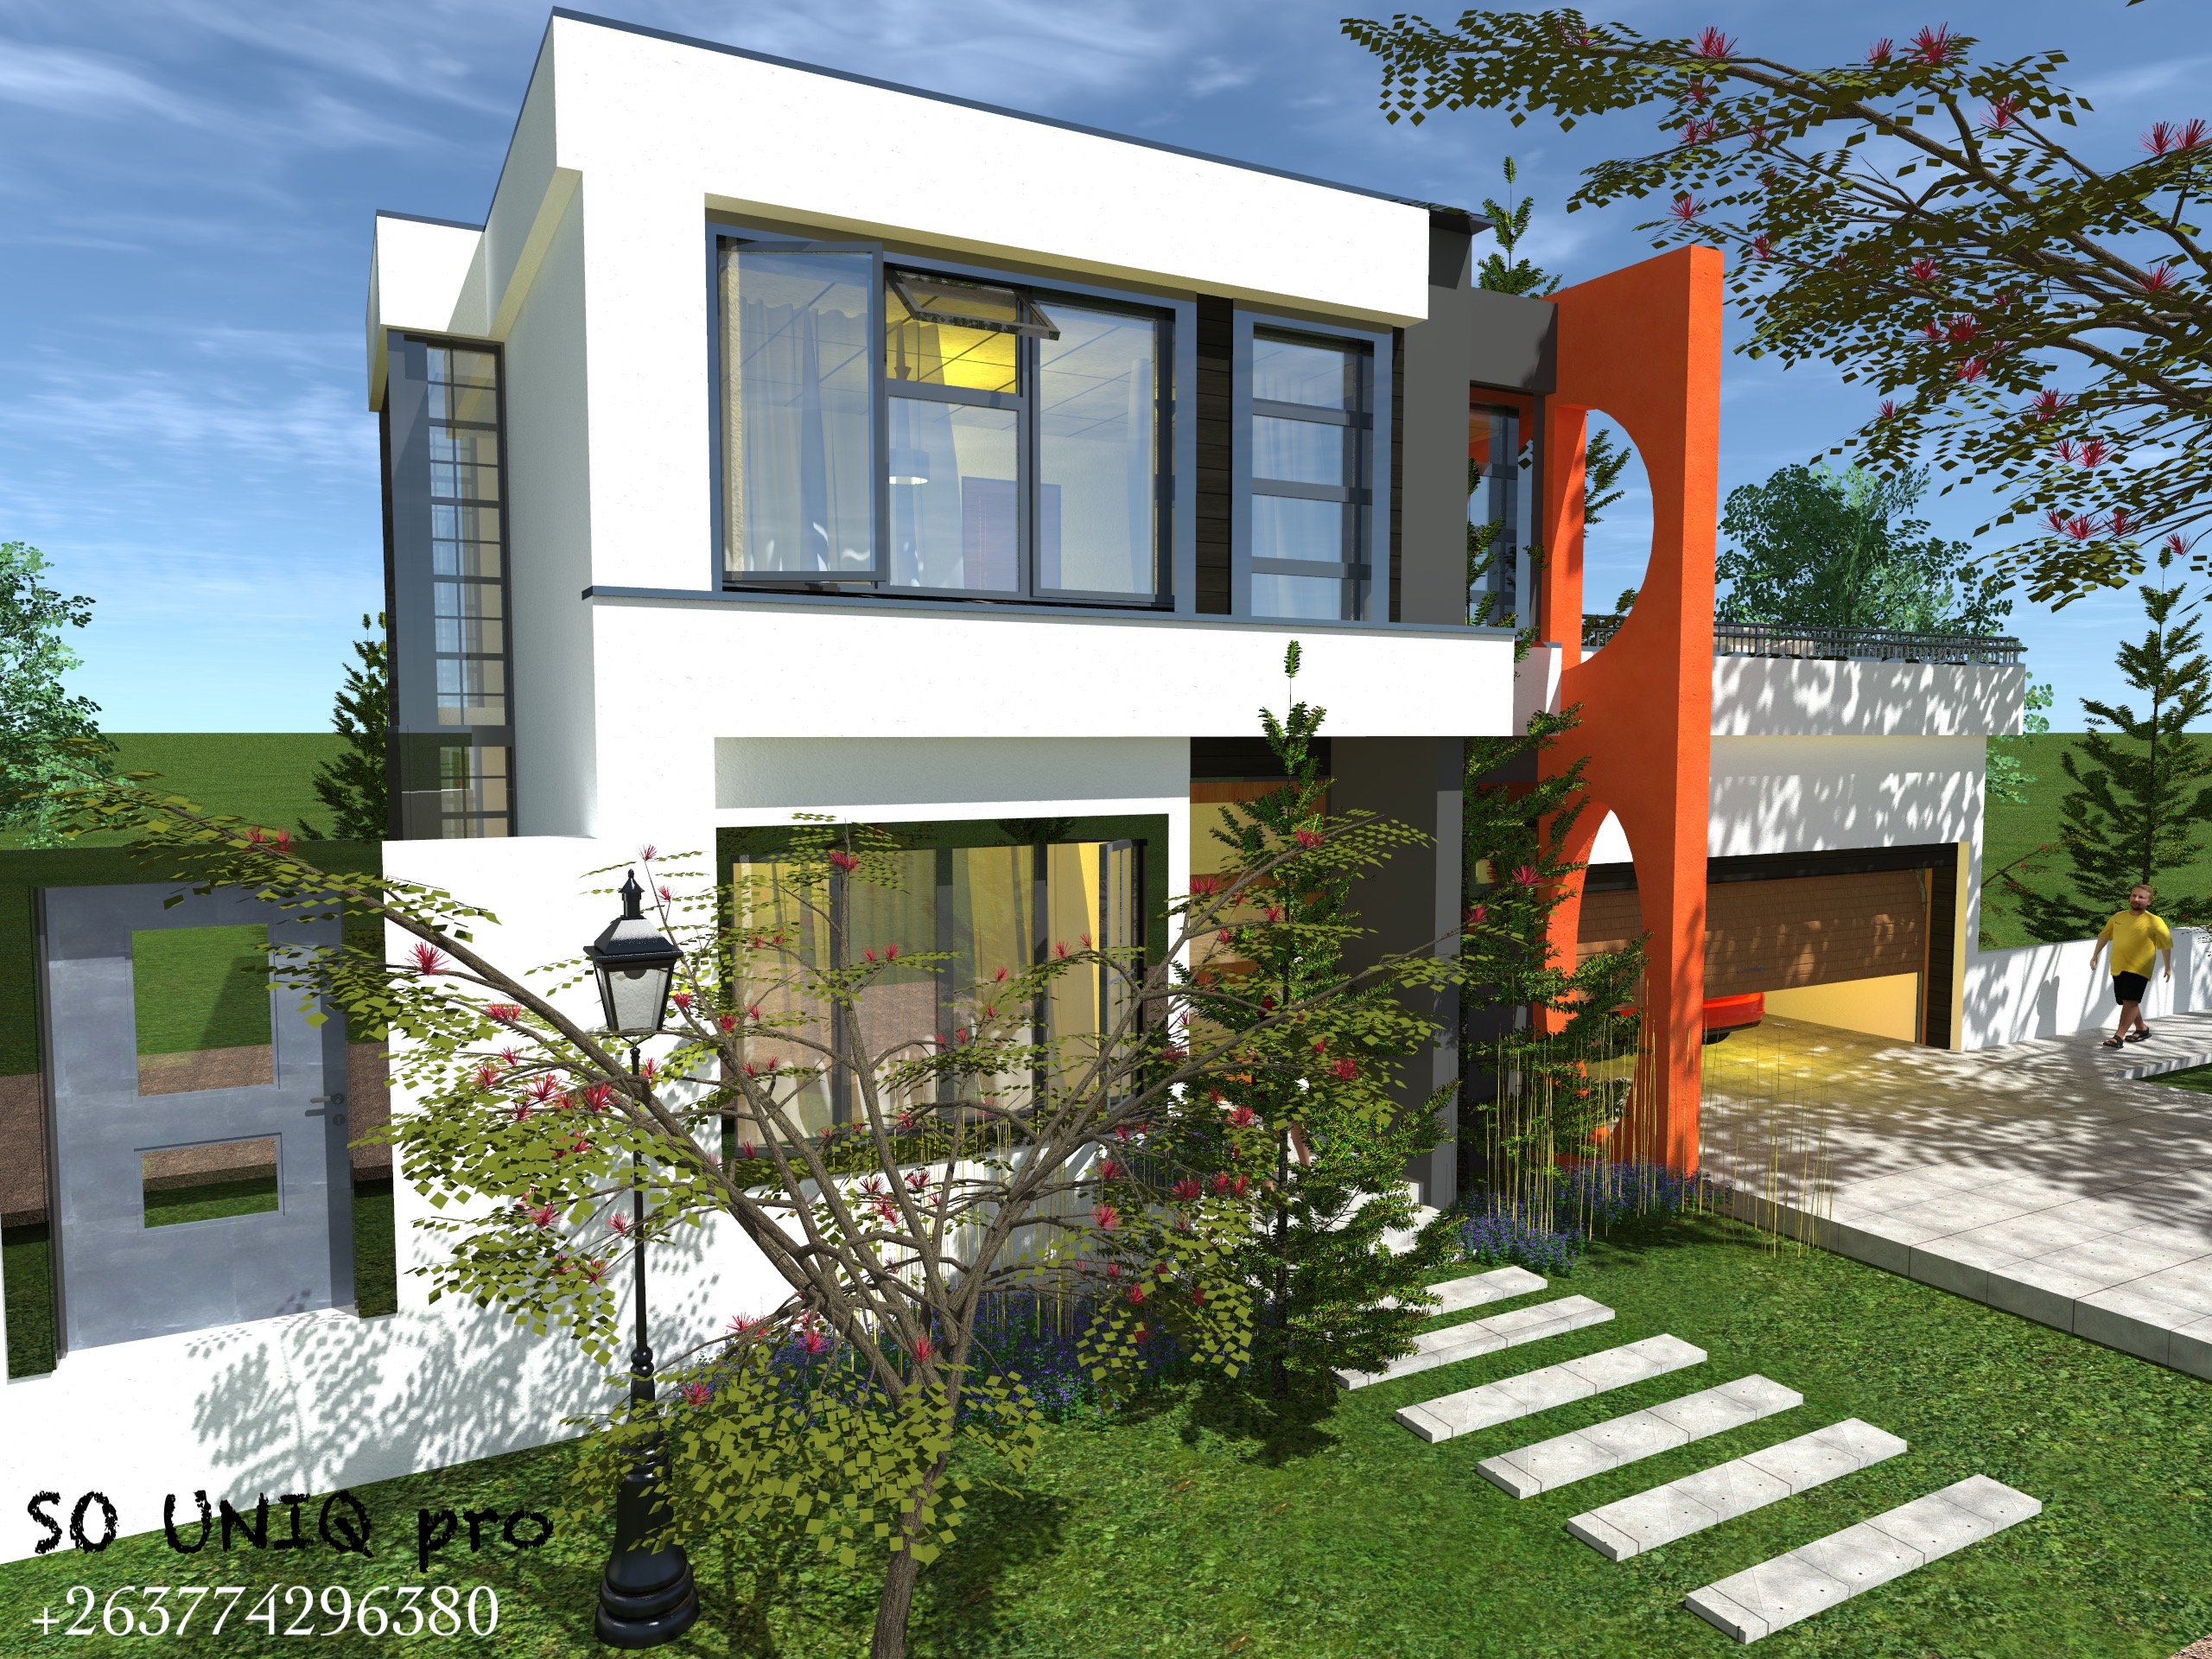 HOUSE PLAN designs